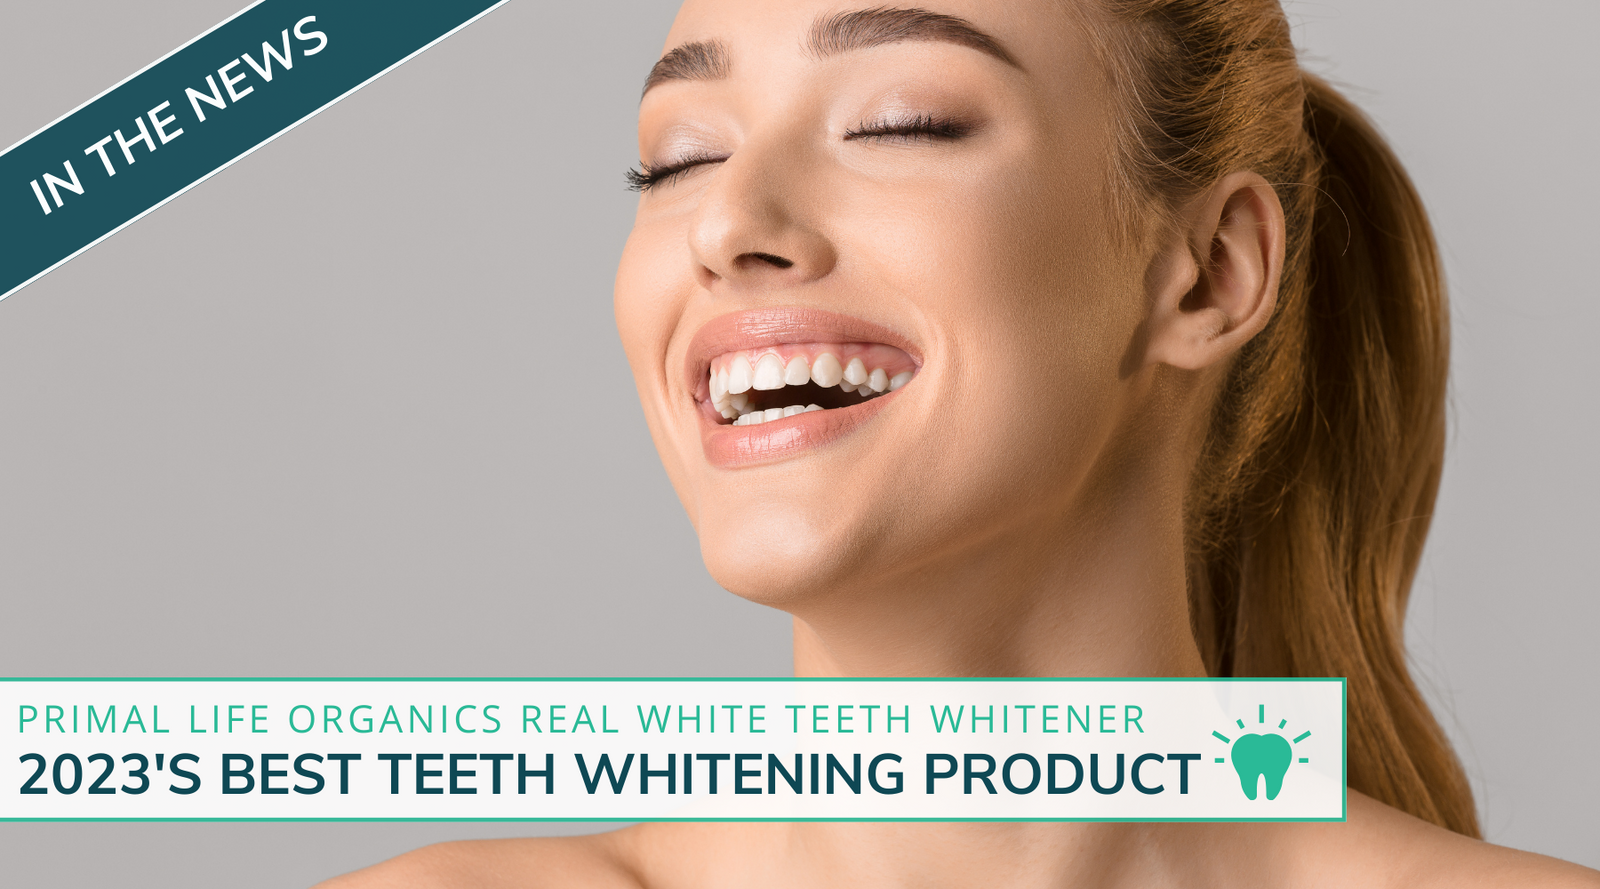 2023's Best Teeth Whitening Product: Primal Life Organics Real White Teeth Whitener